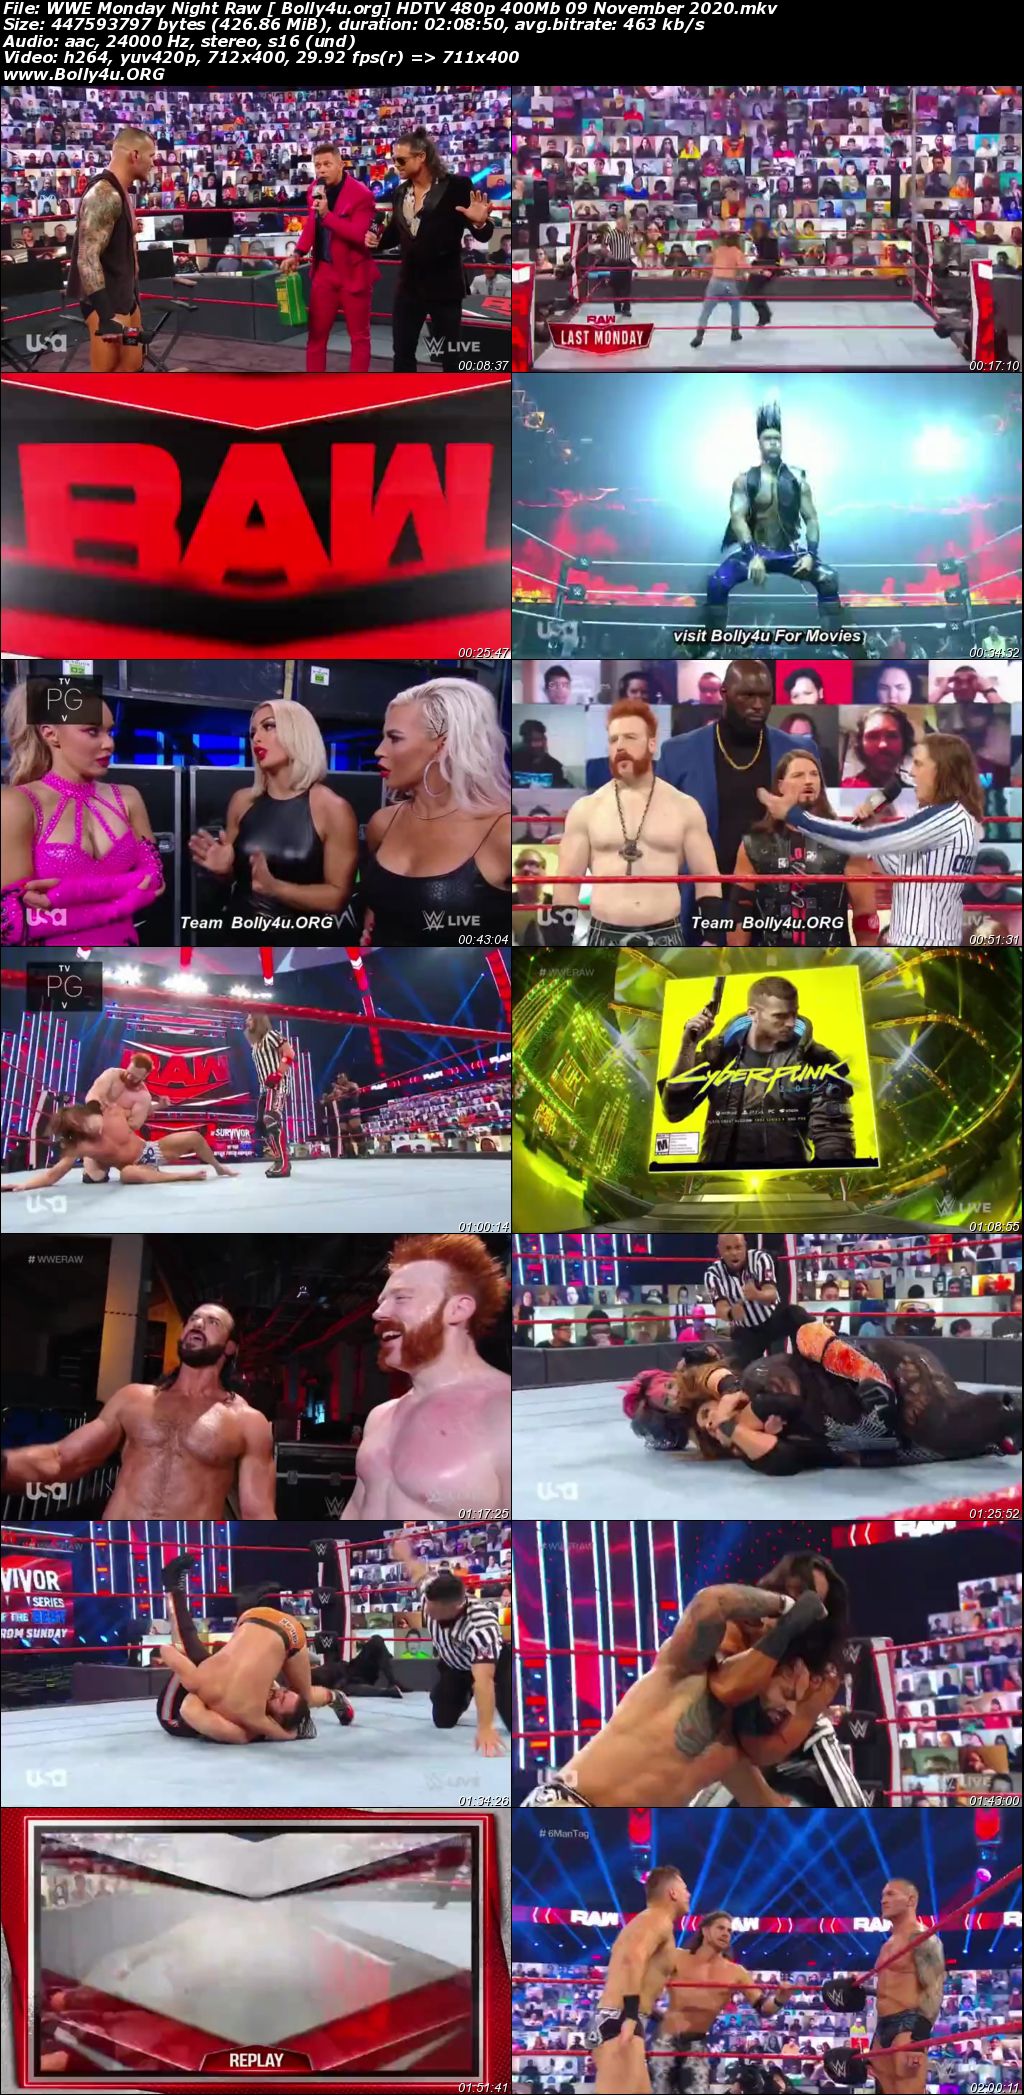 WWE Monday Night Raw HDTV 480p 400Mb 09 November 2020 Download